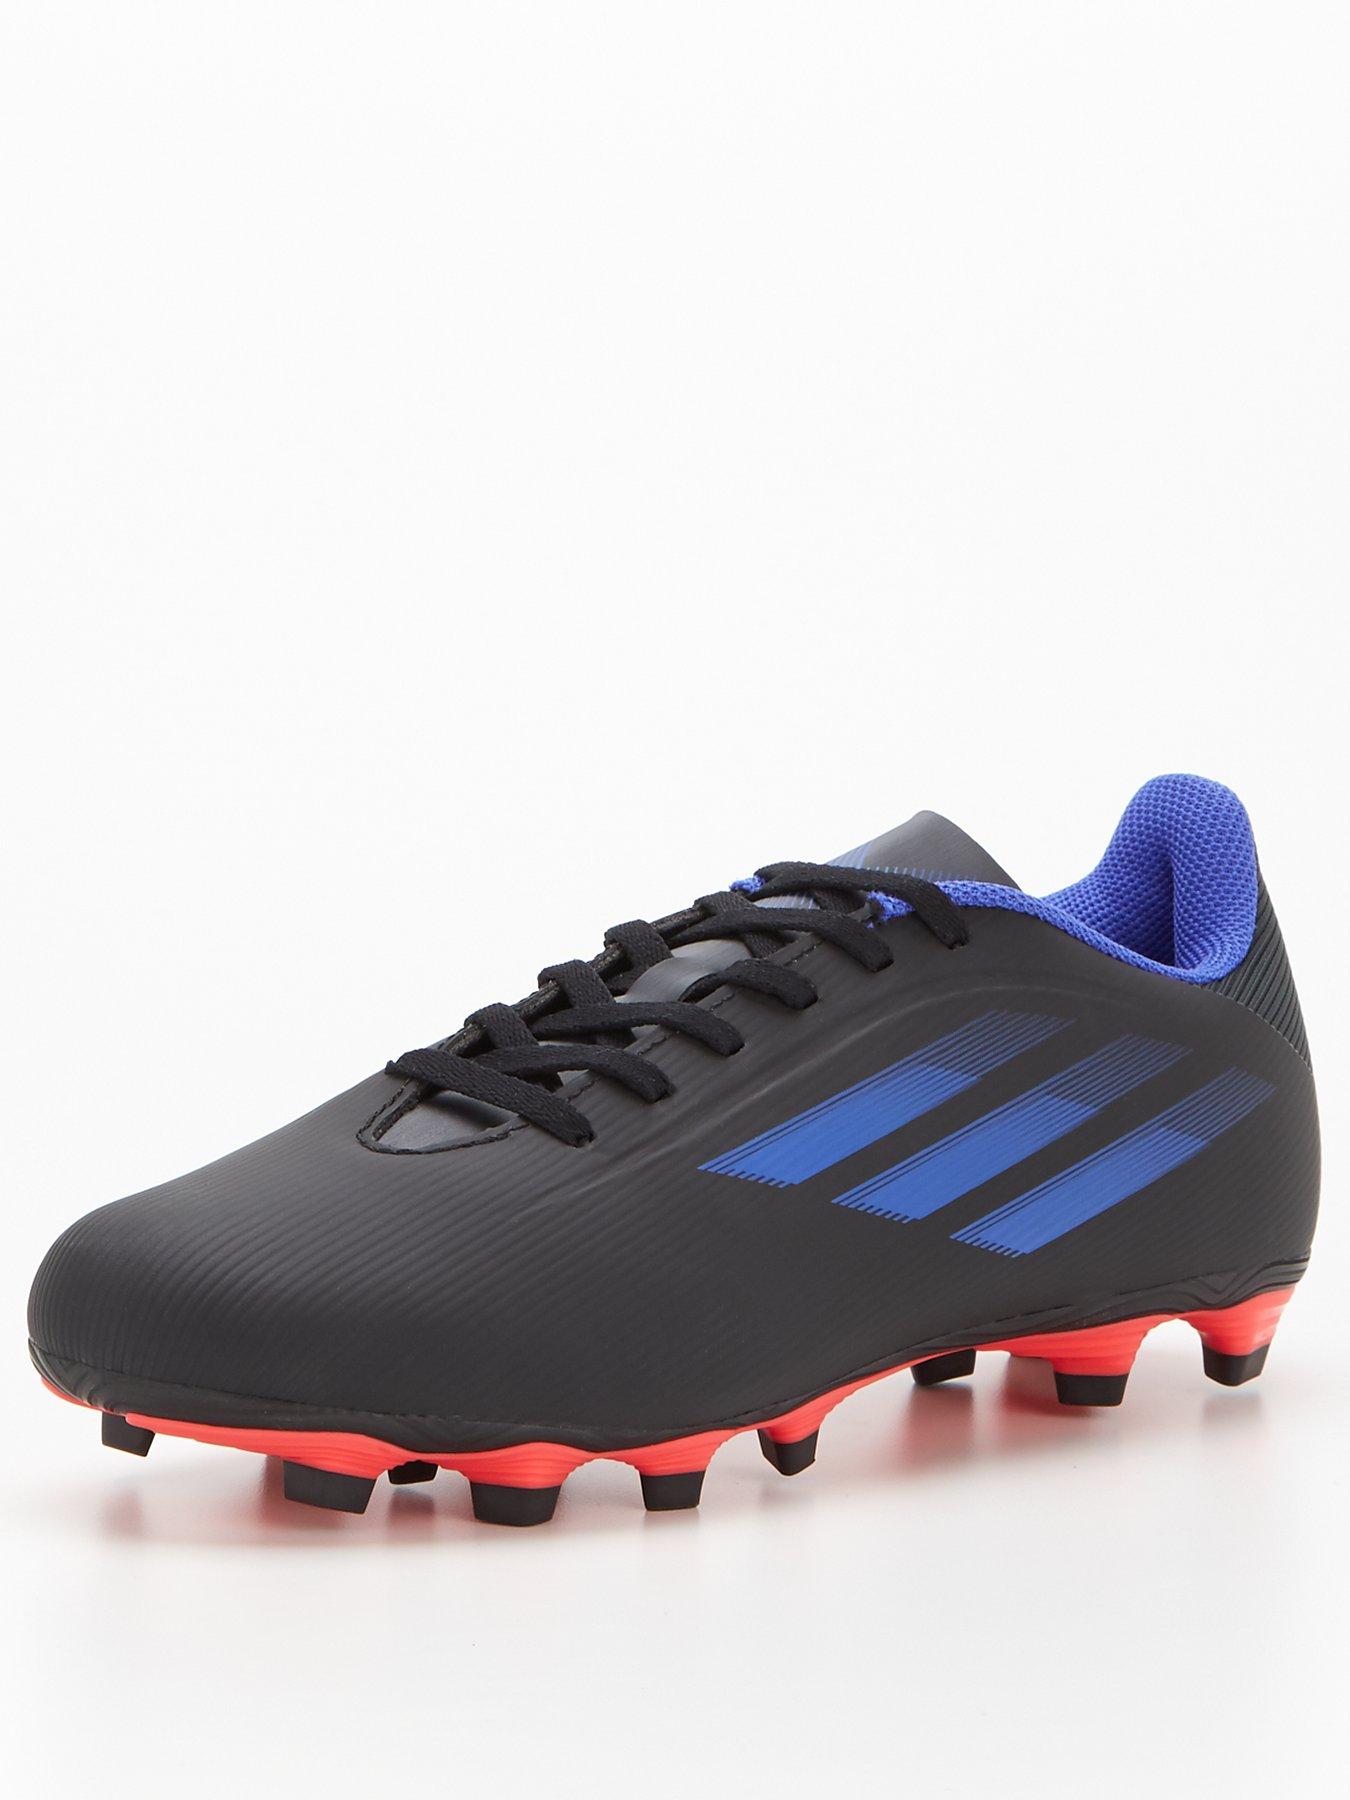 Football X Speedflow.4 Firm Ground Football Boots - Black